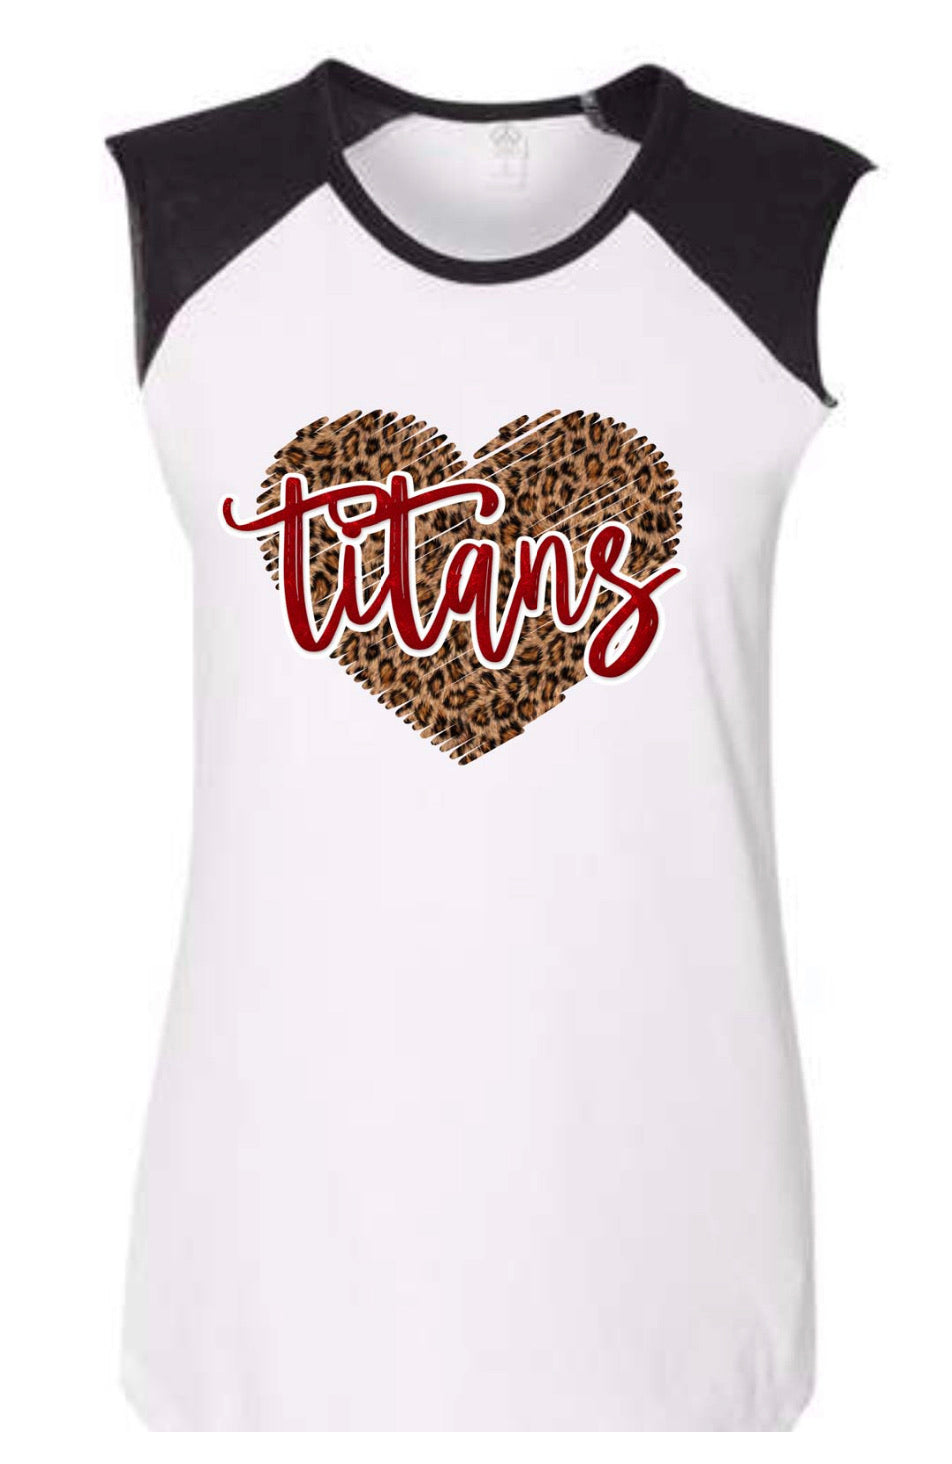 Titans cheetah design